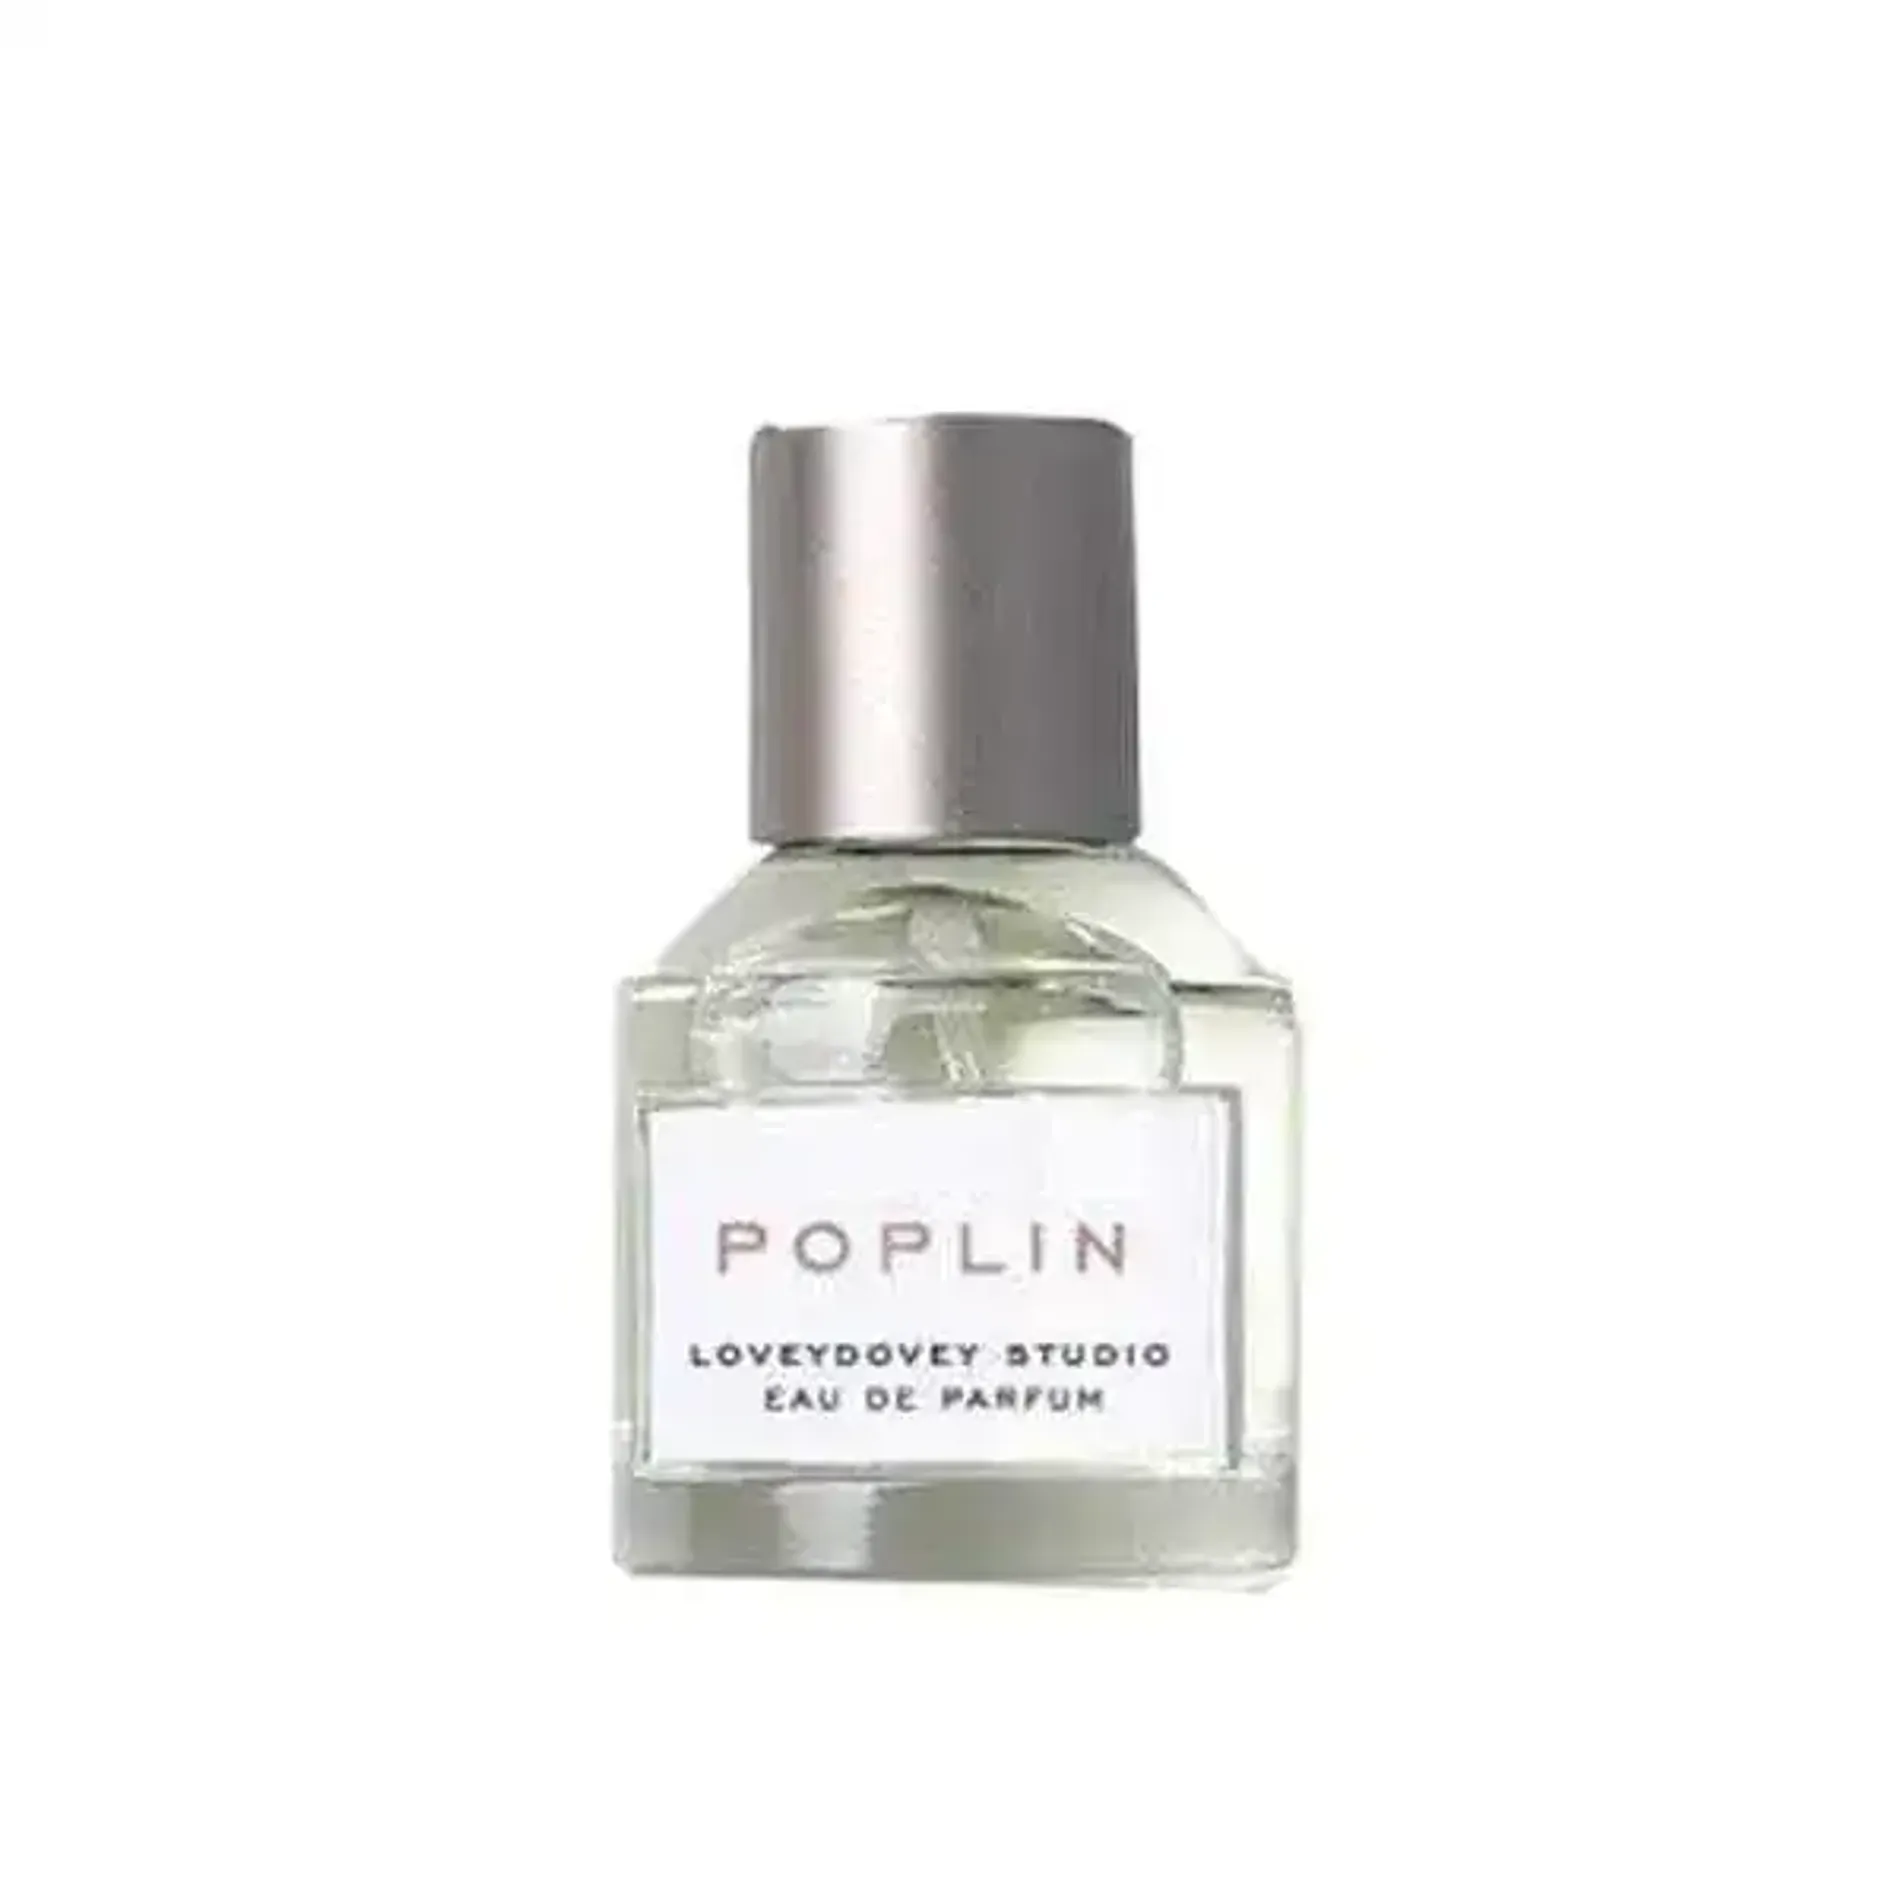 nuoc-hoa-loveydovey-eau-de-parfum-poplin-30ml-30ml-2